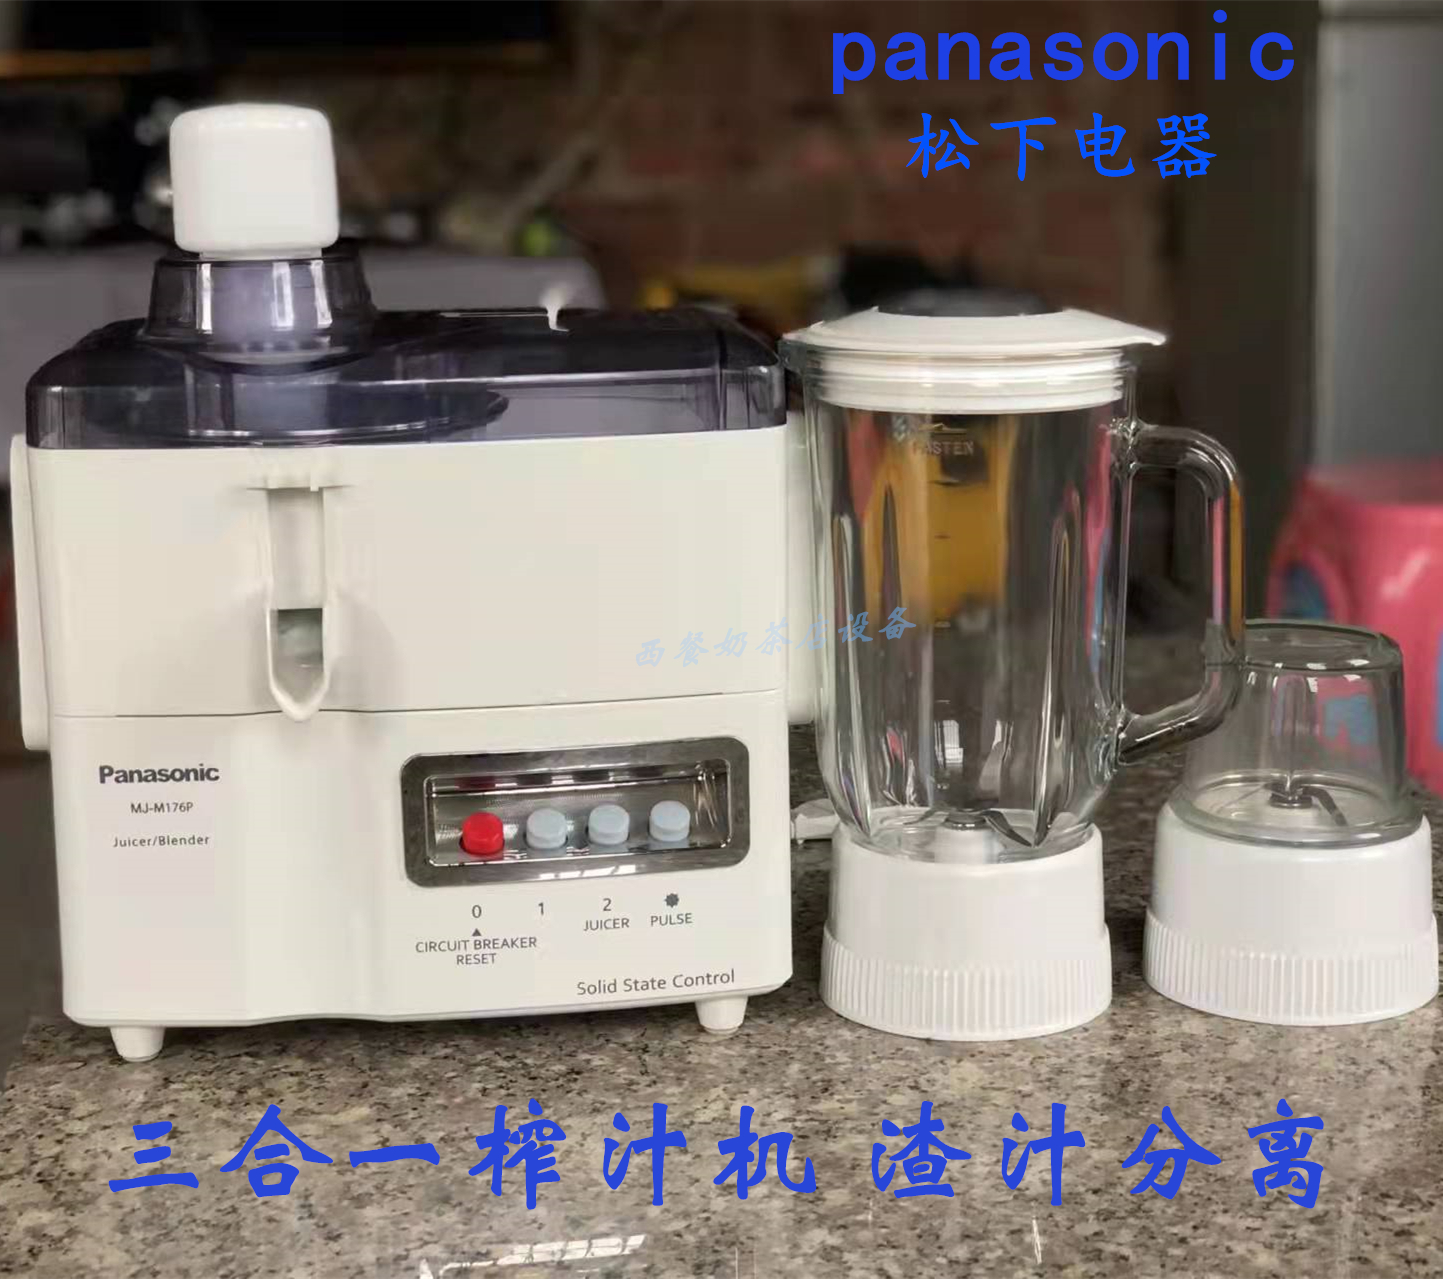 Panasonic / Panasonic mj-m176p three in one Juicer multi functional household fruit juice mixing separation